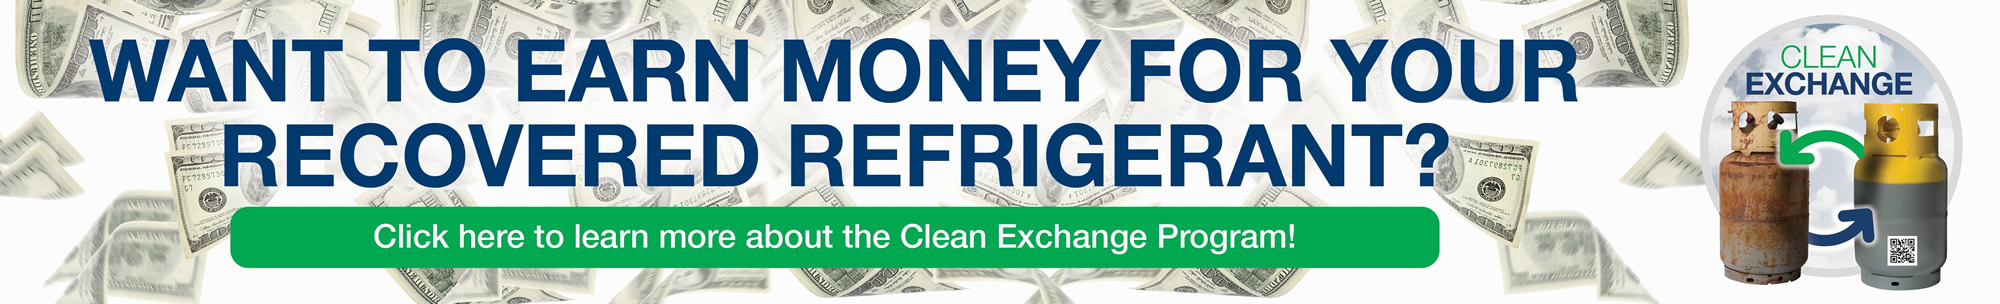 Clean Exchange Banner